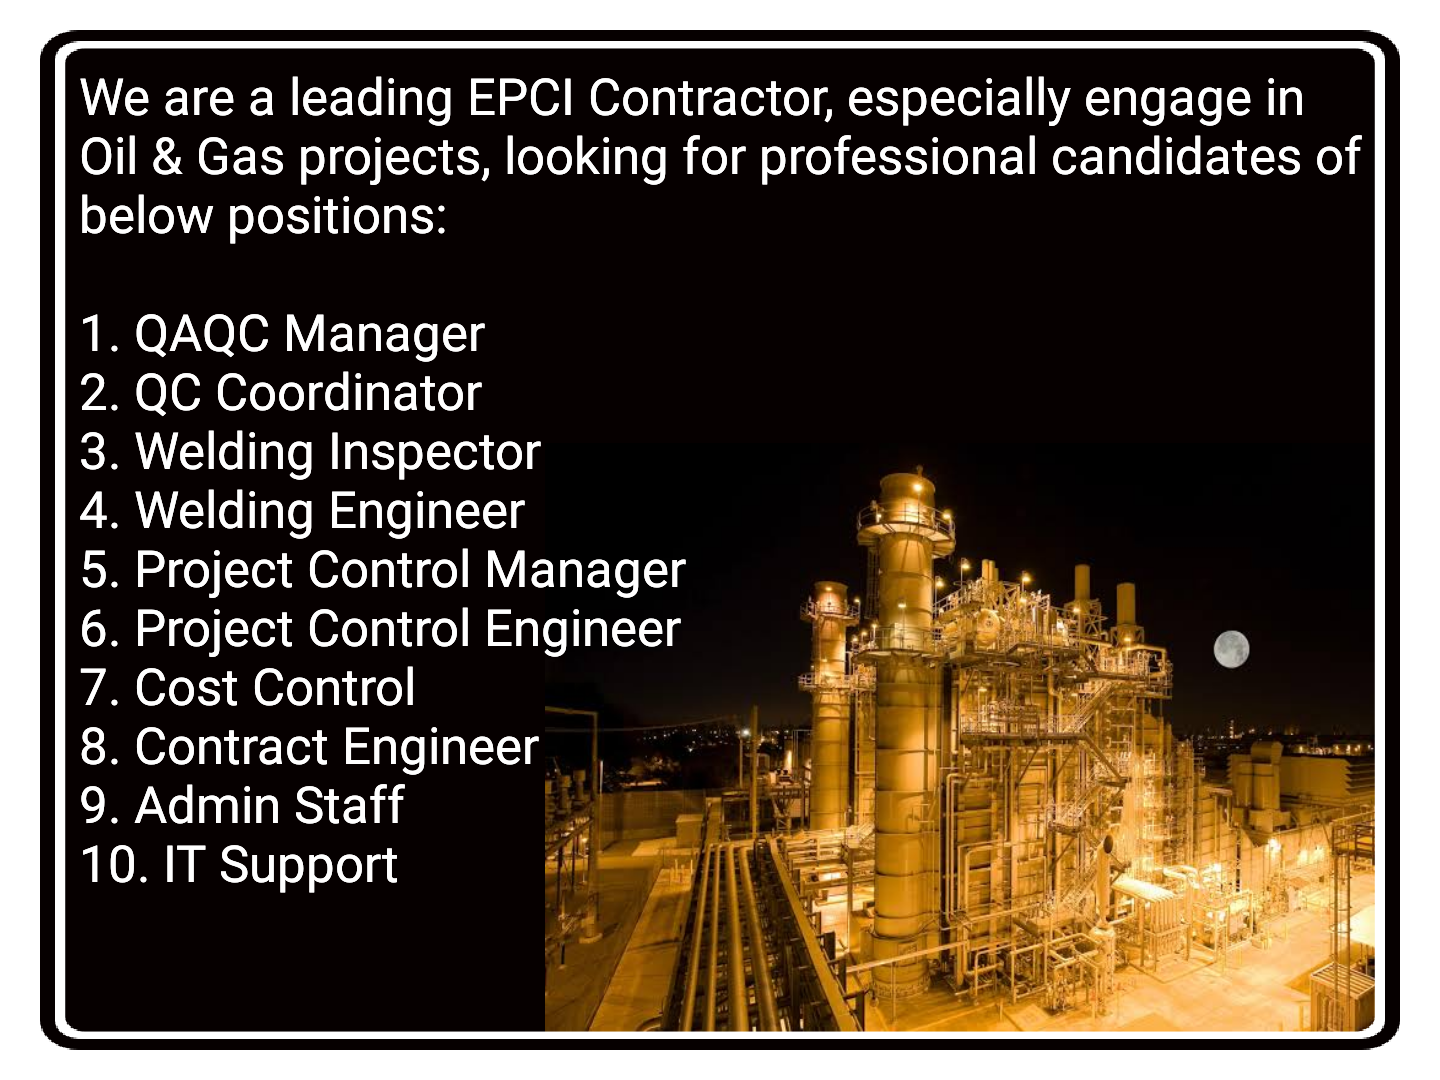 QAQC Manager, Coordinator, Welding Inspector, Engineer, Project Control & Admin Staff Jobs